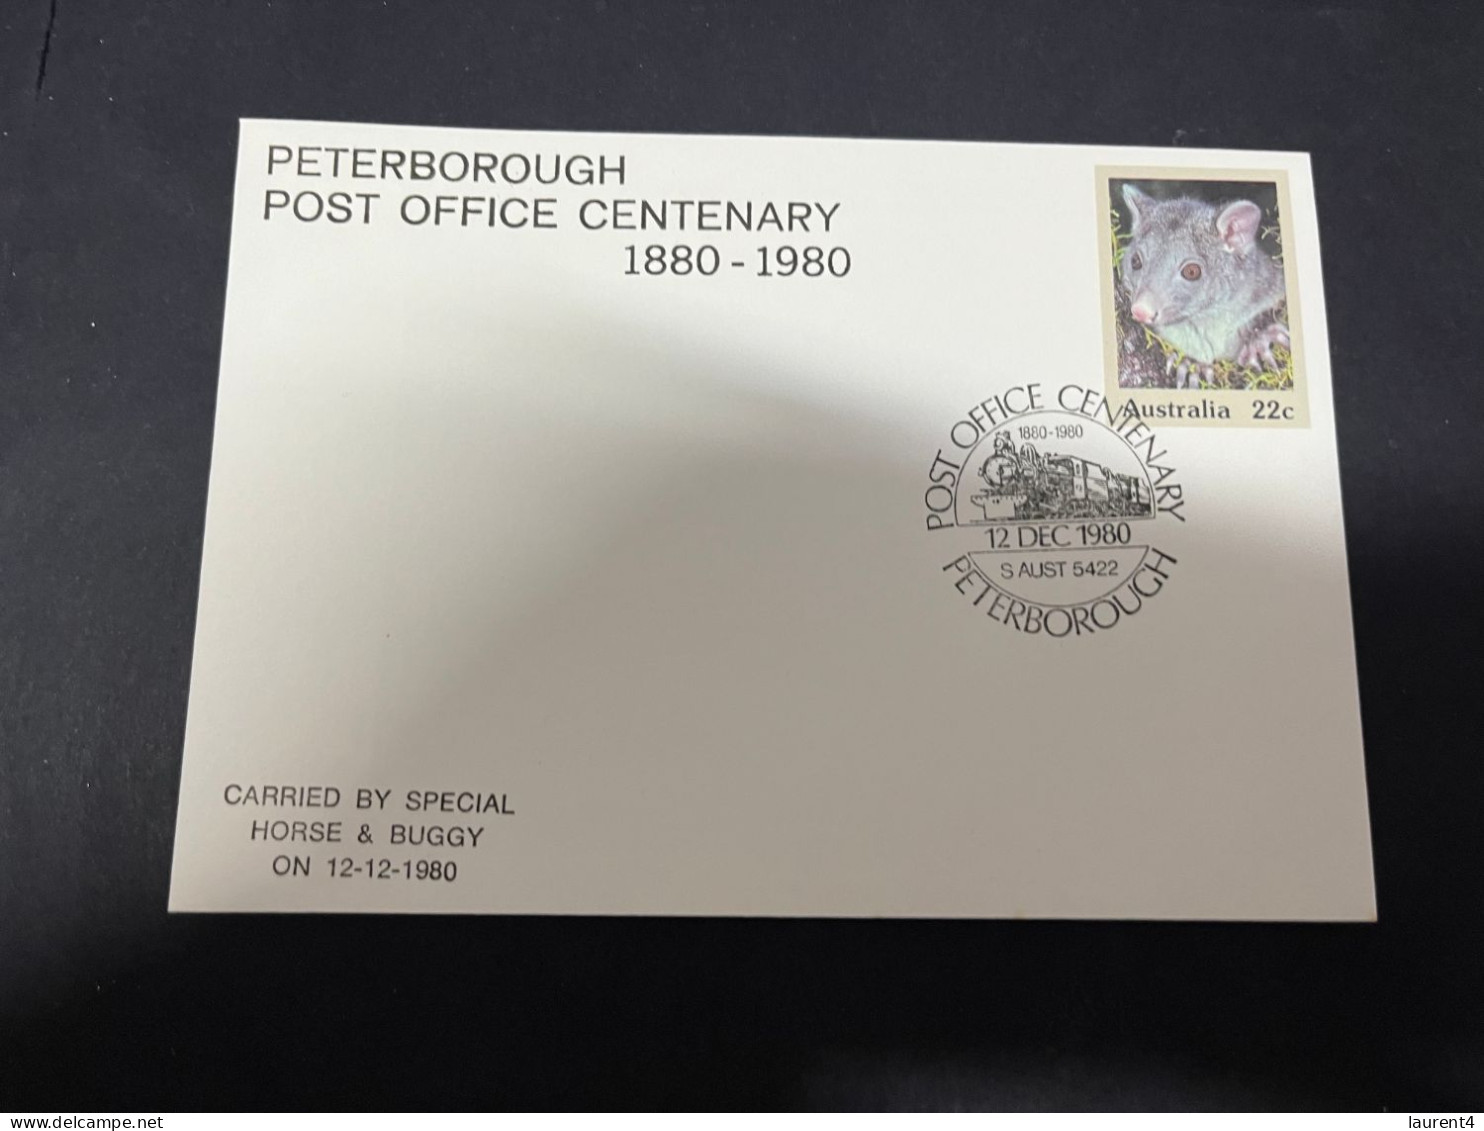 30-4-2023 (3 Z 29) Australia FDC (1 Cover) 1980 - Peterborough Post Office Centenary (Brushtail Possum) - Omslagen Van Eerste Dagen (FDC)